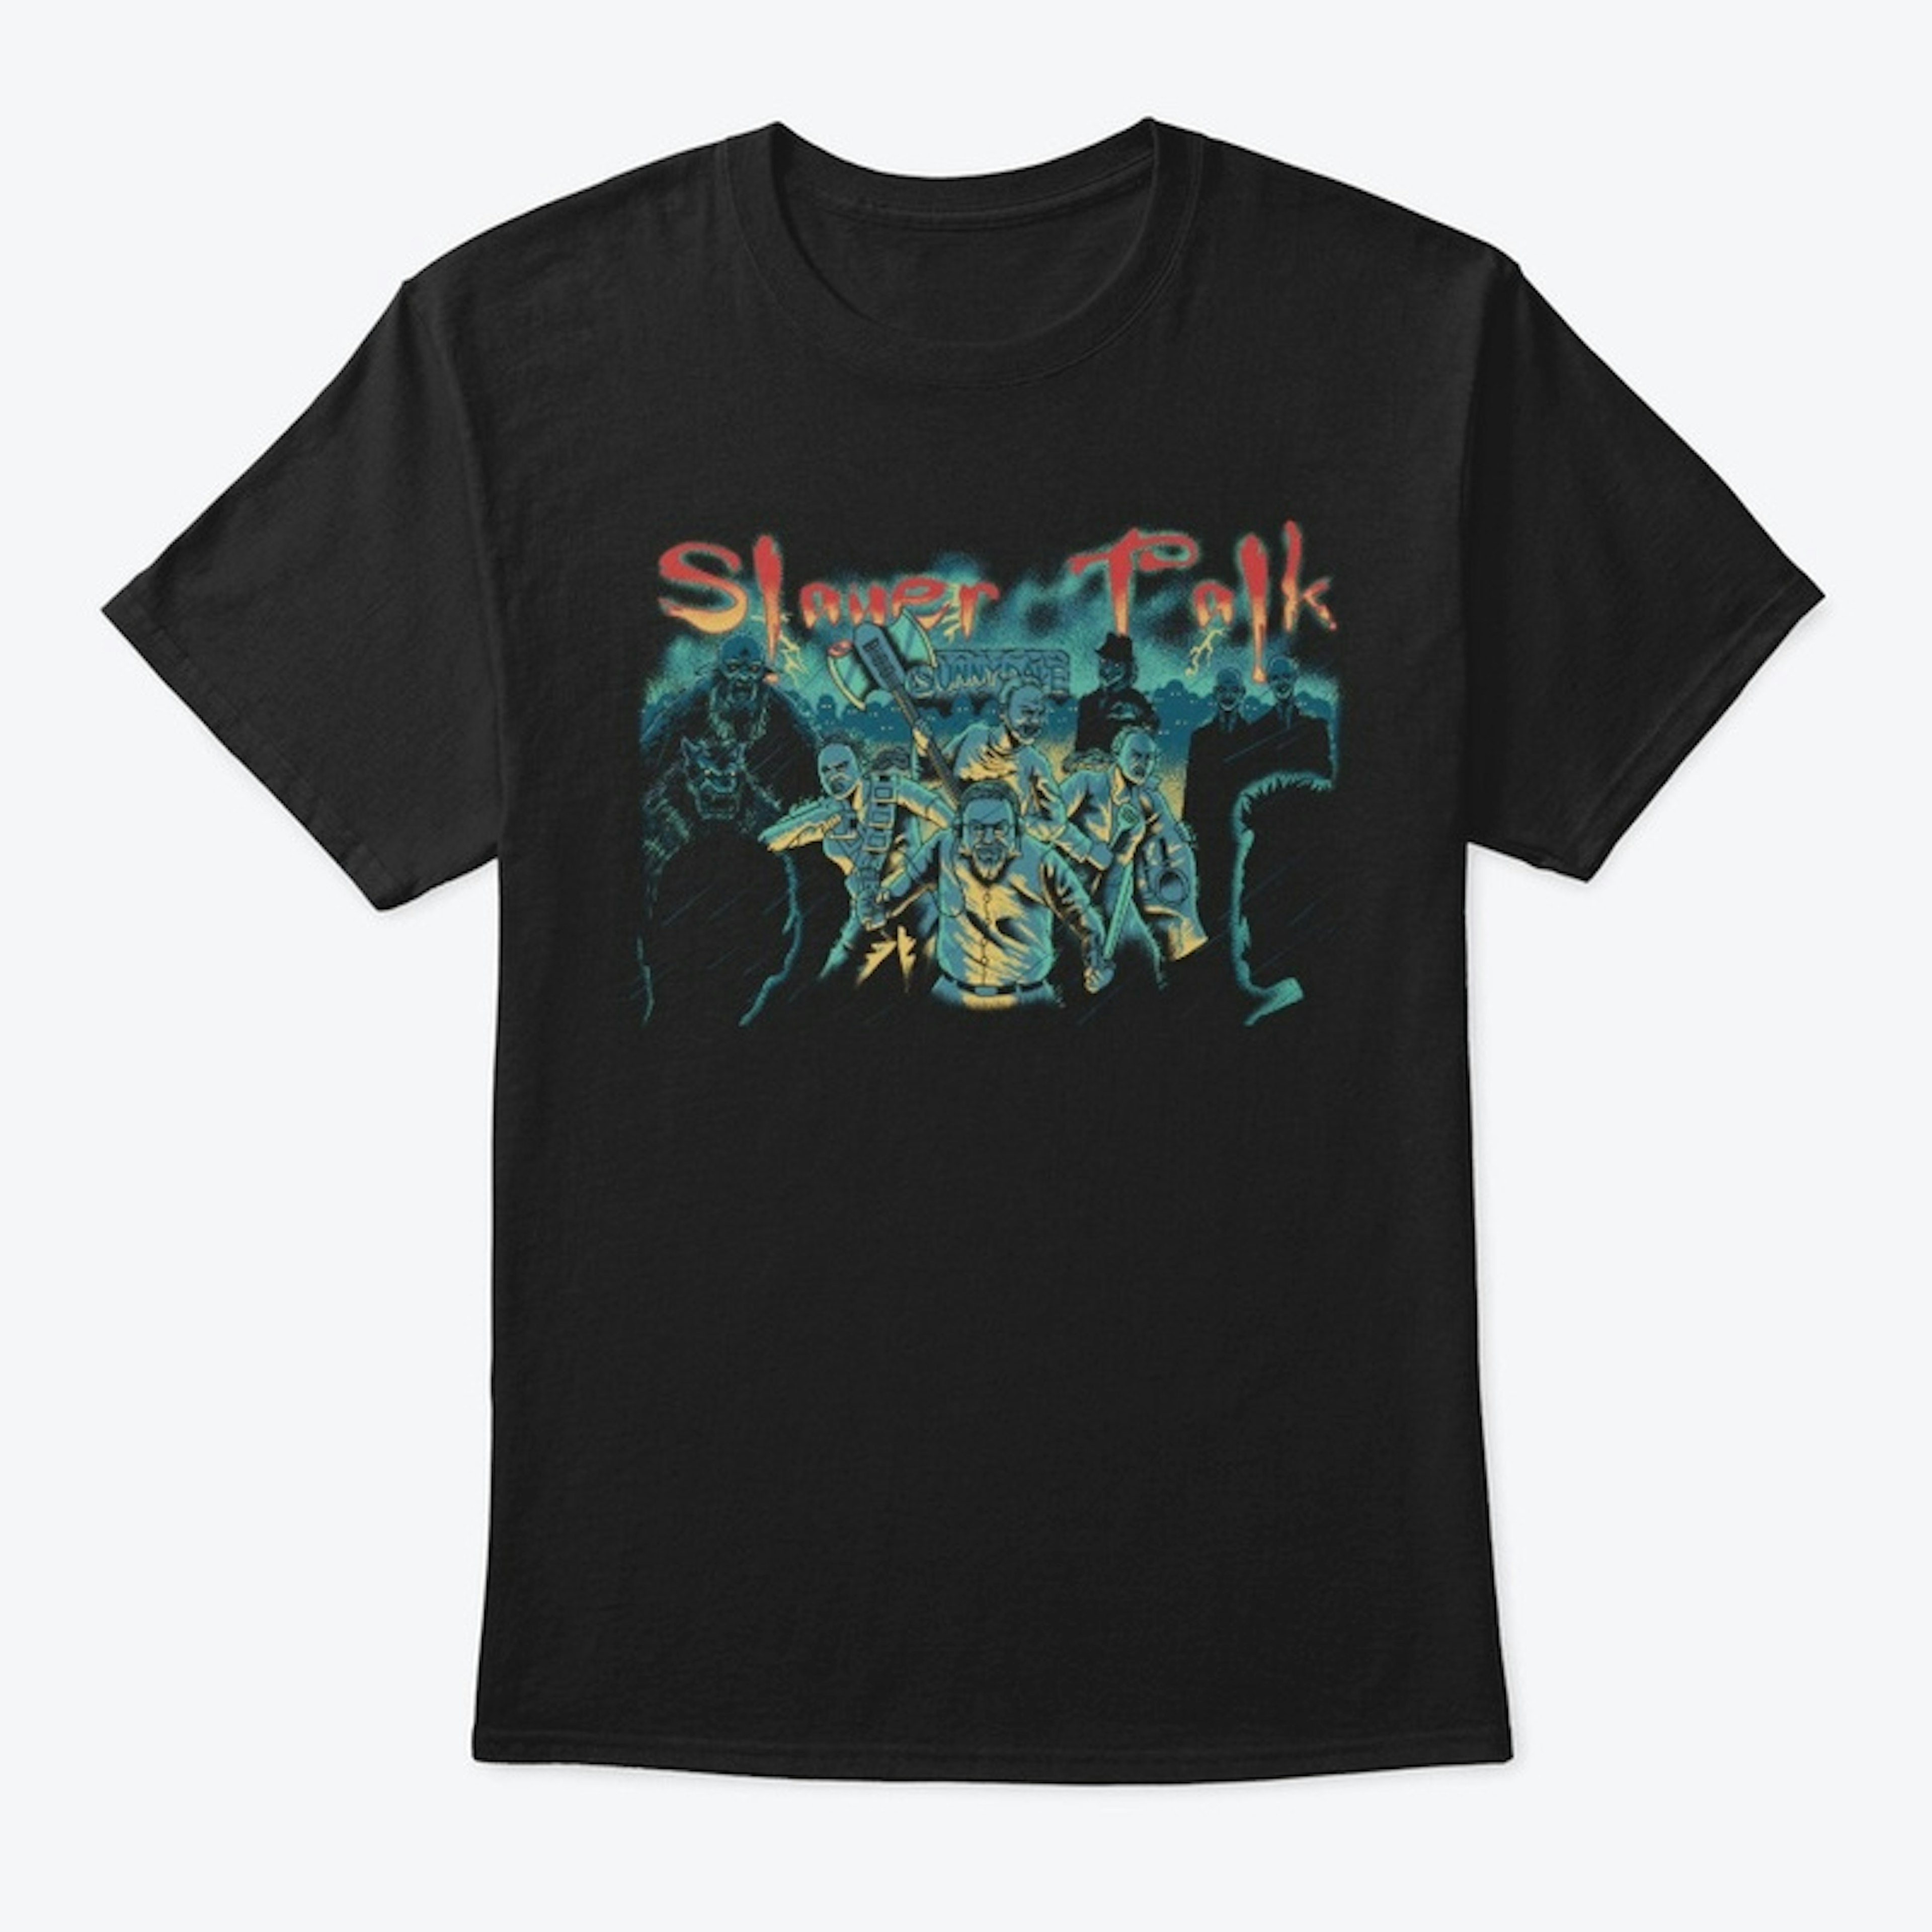 The Slayer Talk Podcast T-Shirt